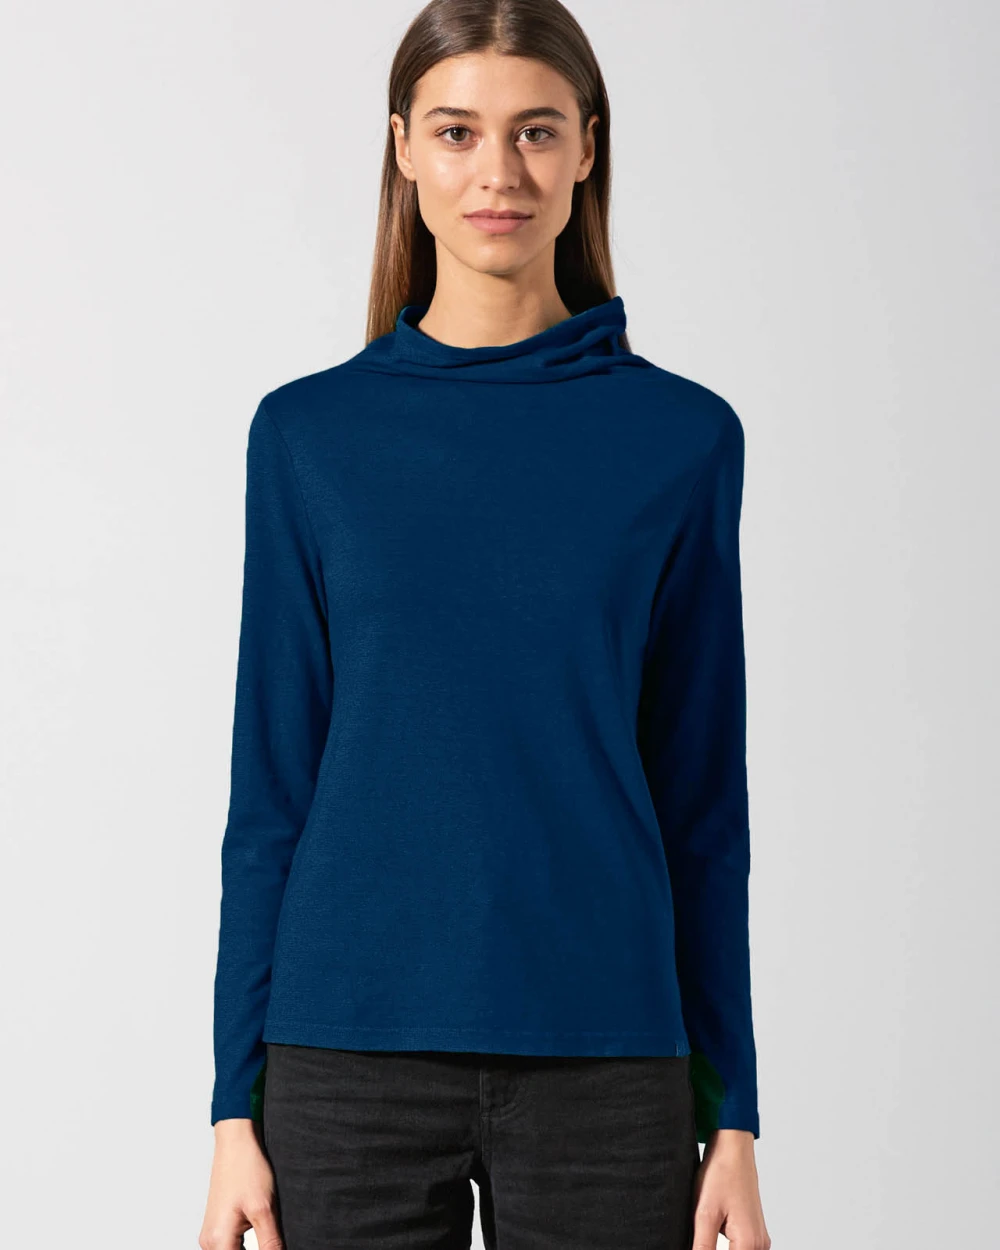 Women's high neck shirt in hemp and organic cotton